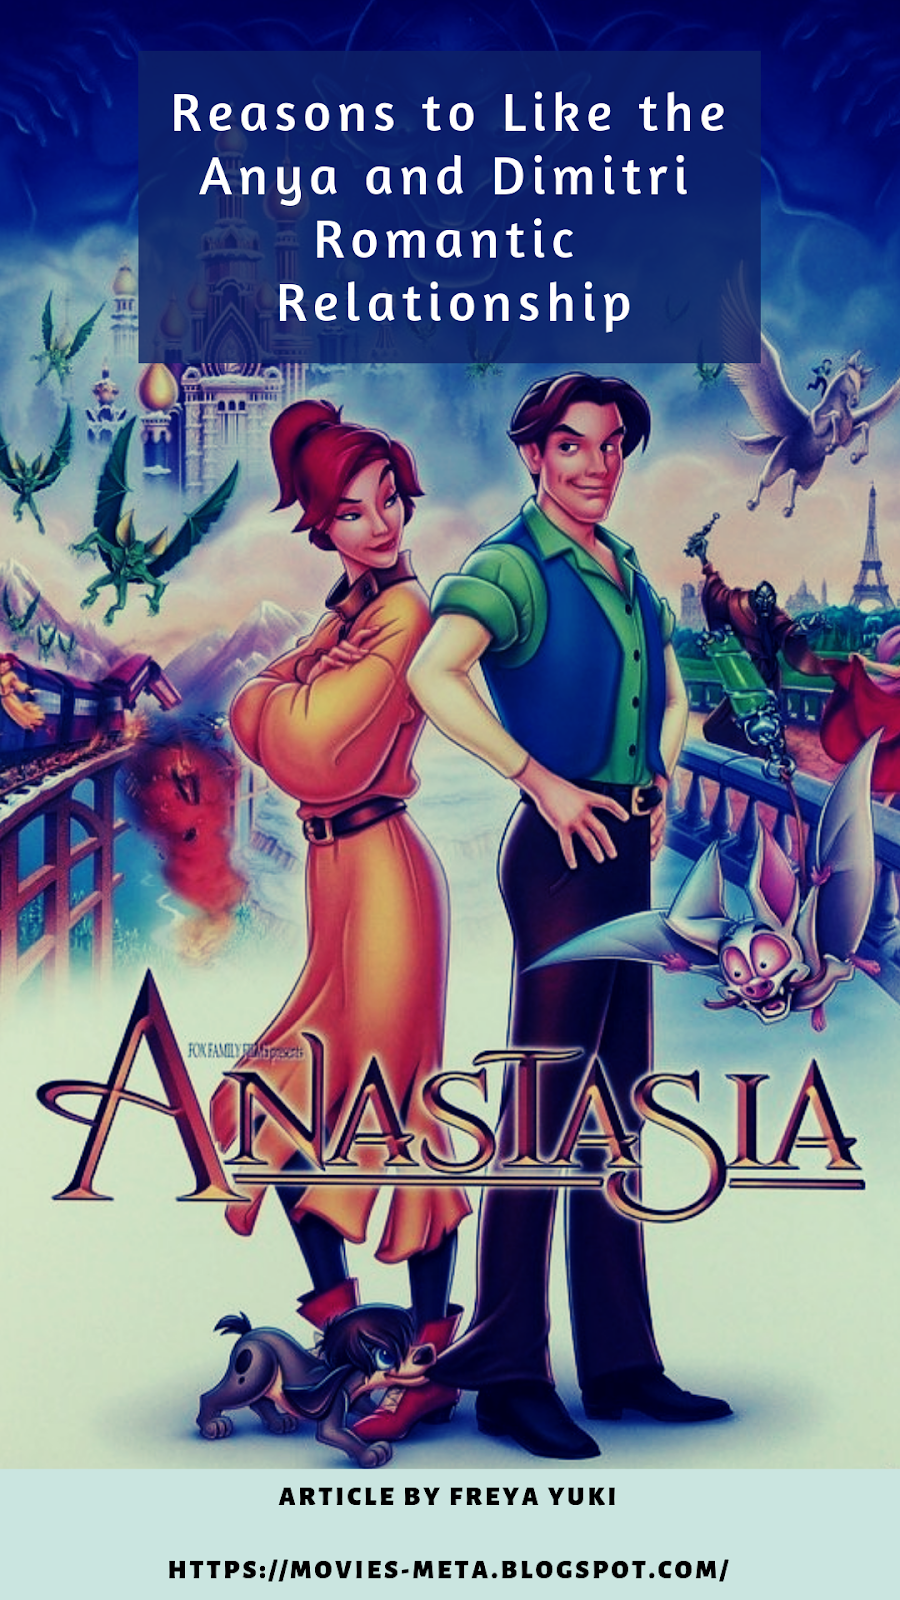 Anastasia 1997 Animated Movie Reasons To Like The Anya And Dimitri Romantic Relationship 